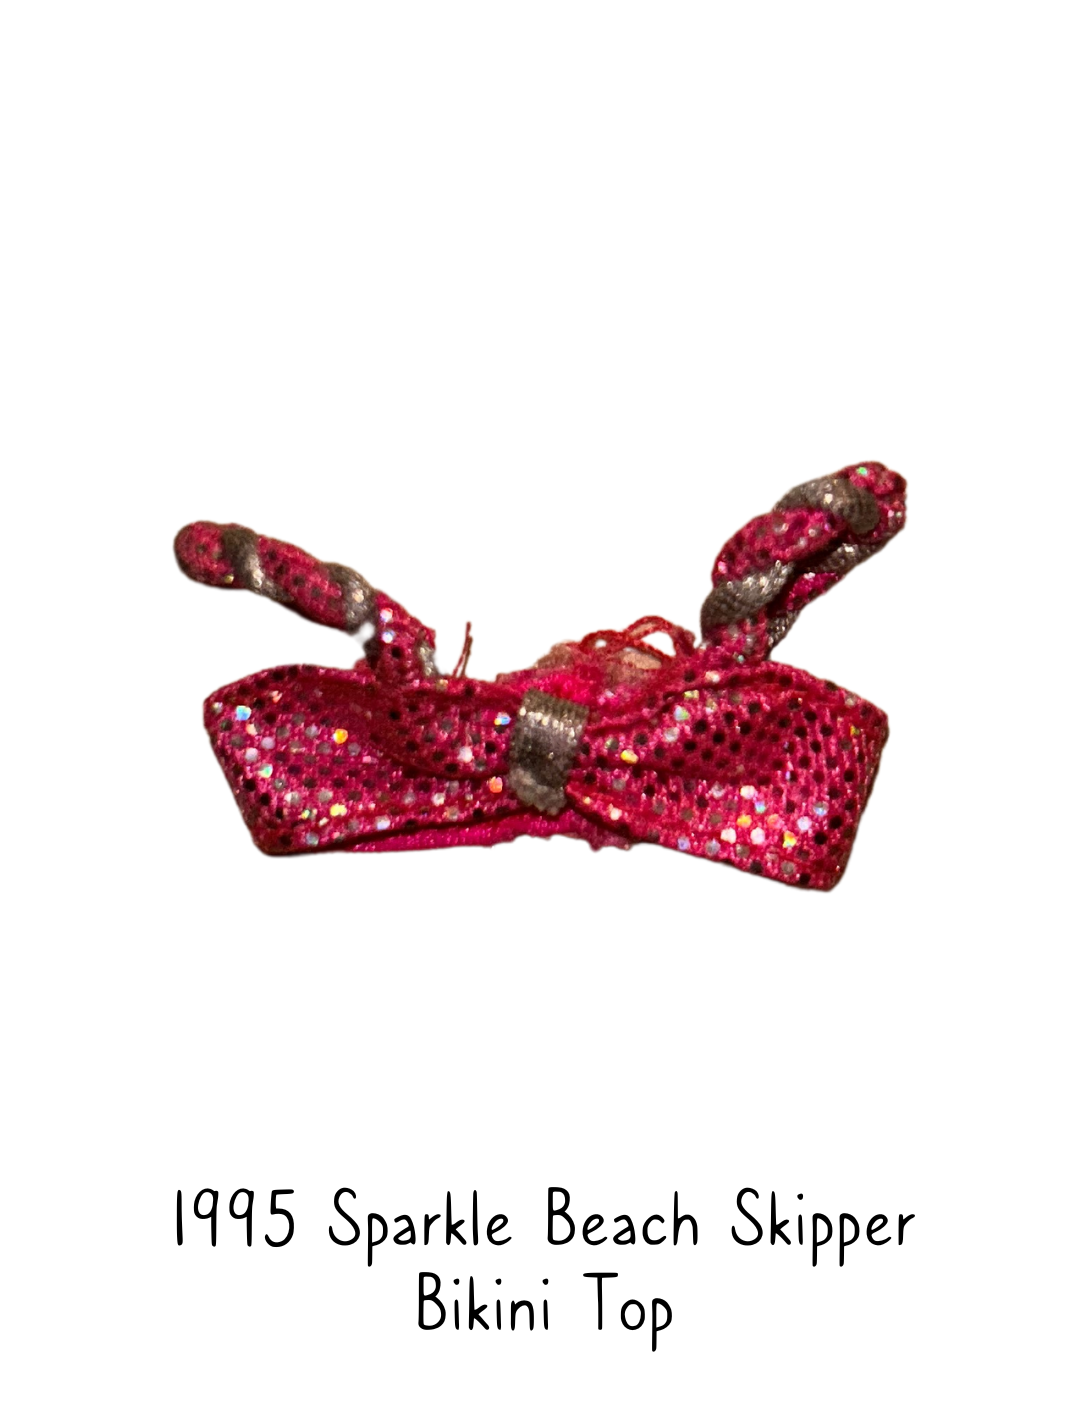 1995 Sparkle Beach Skipper Doll Bikini Top